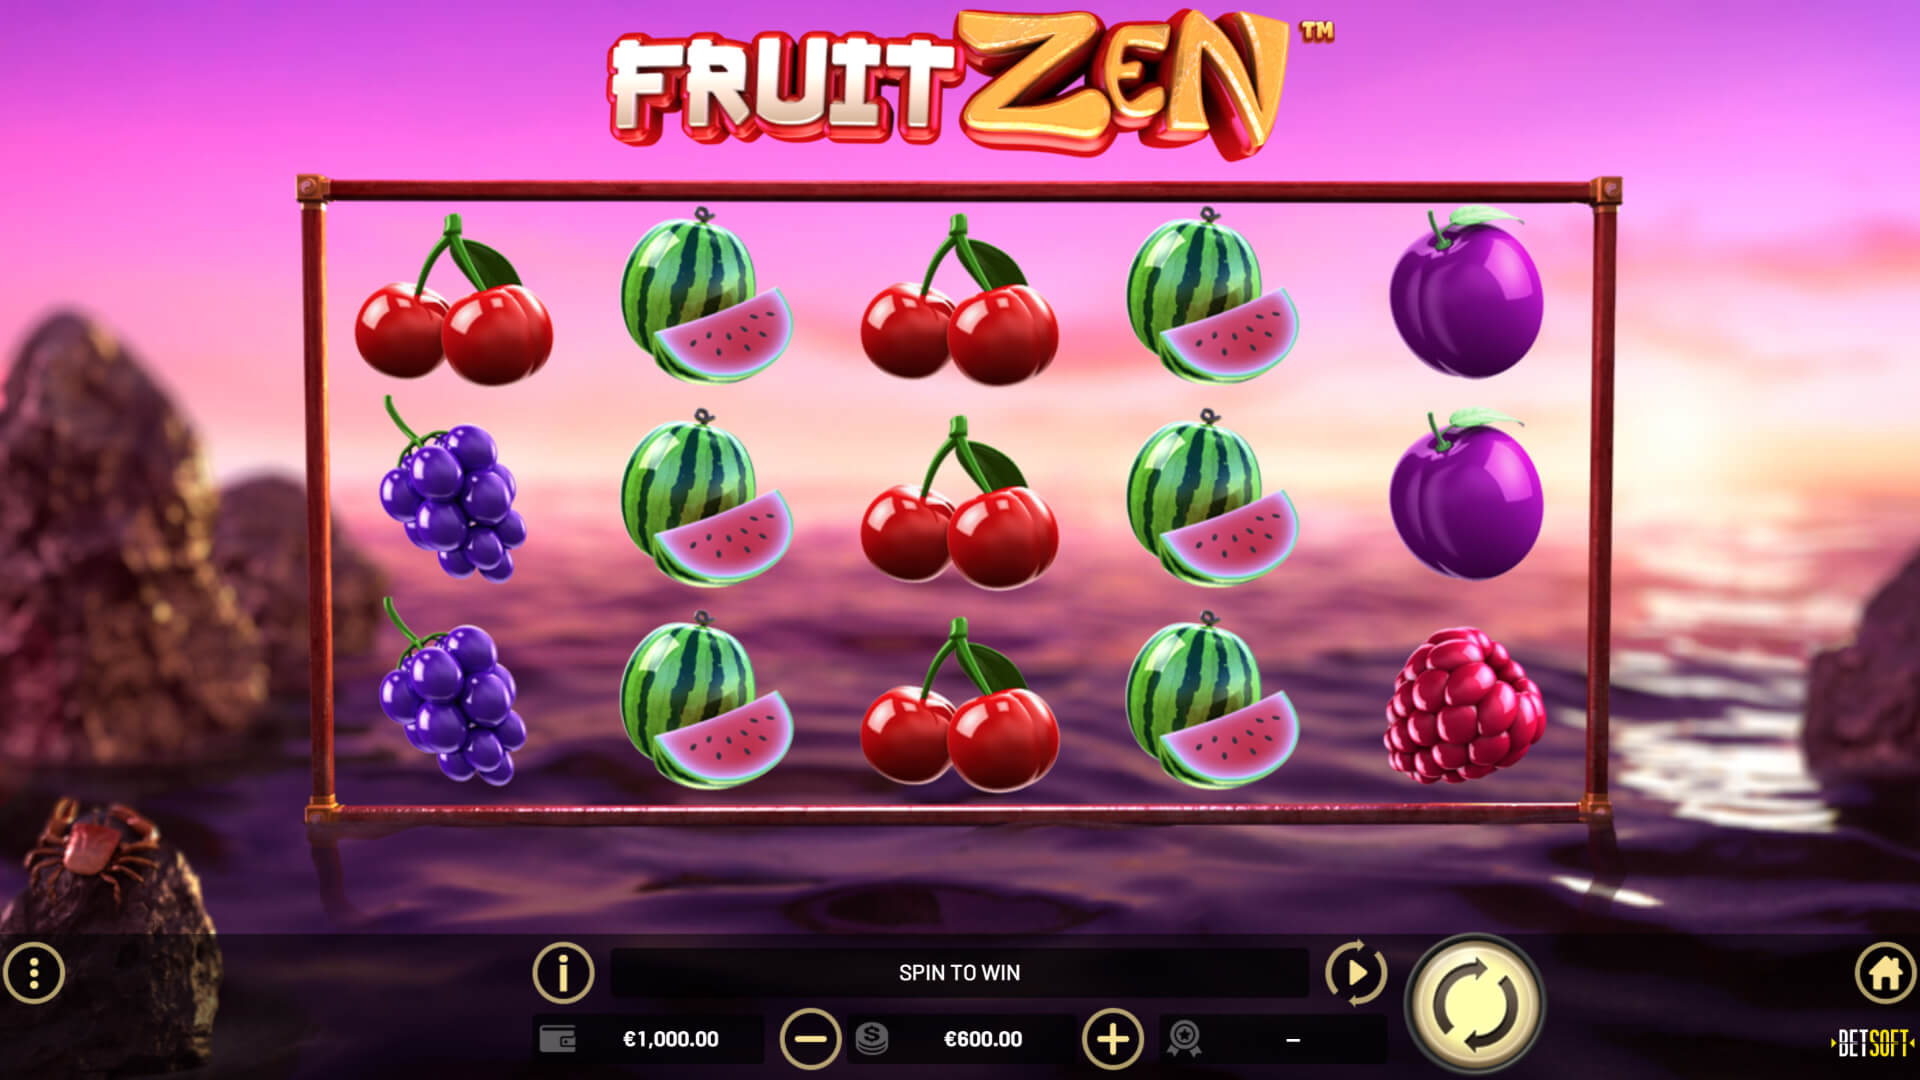 Fruit zen